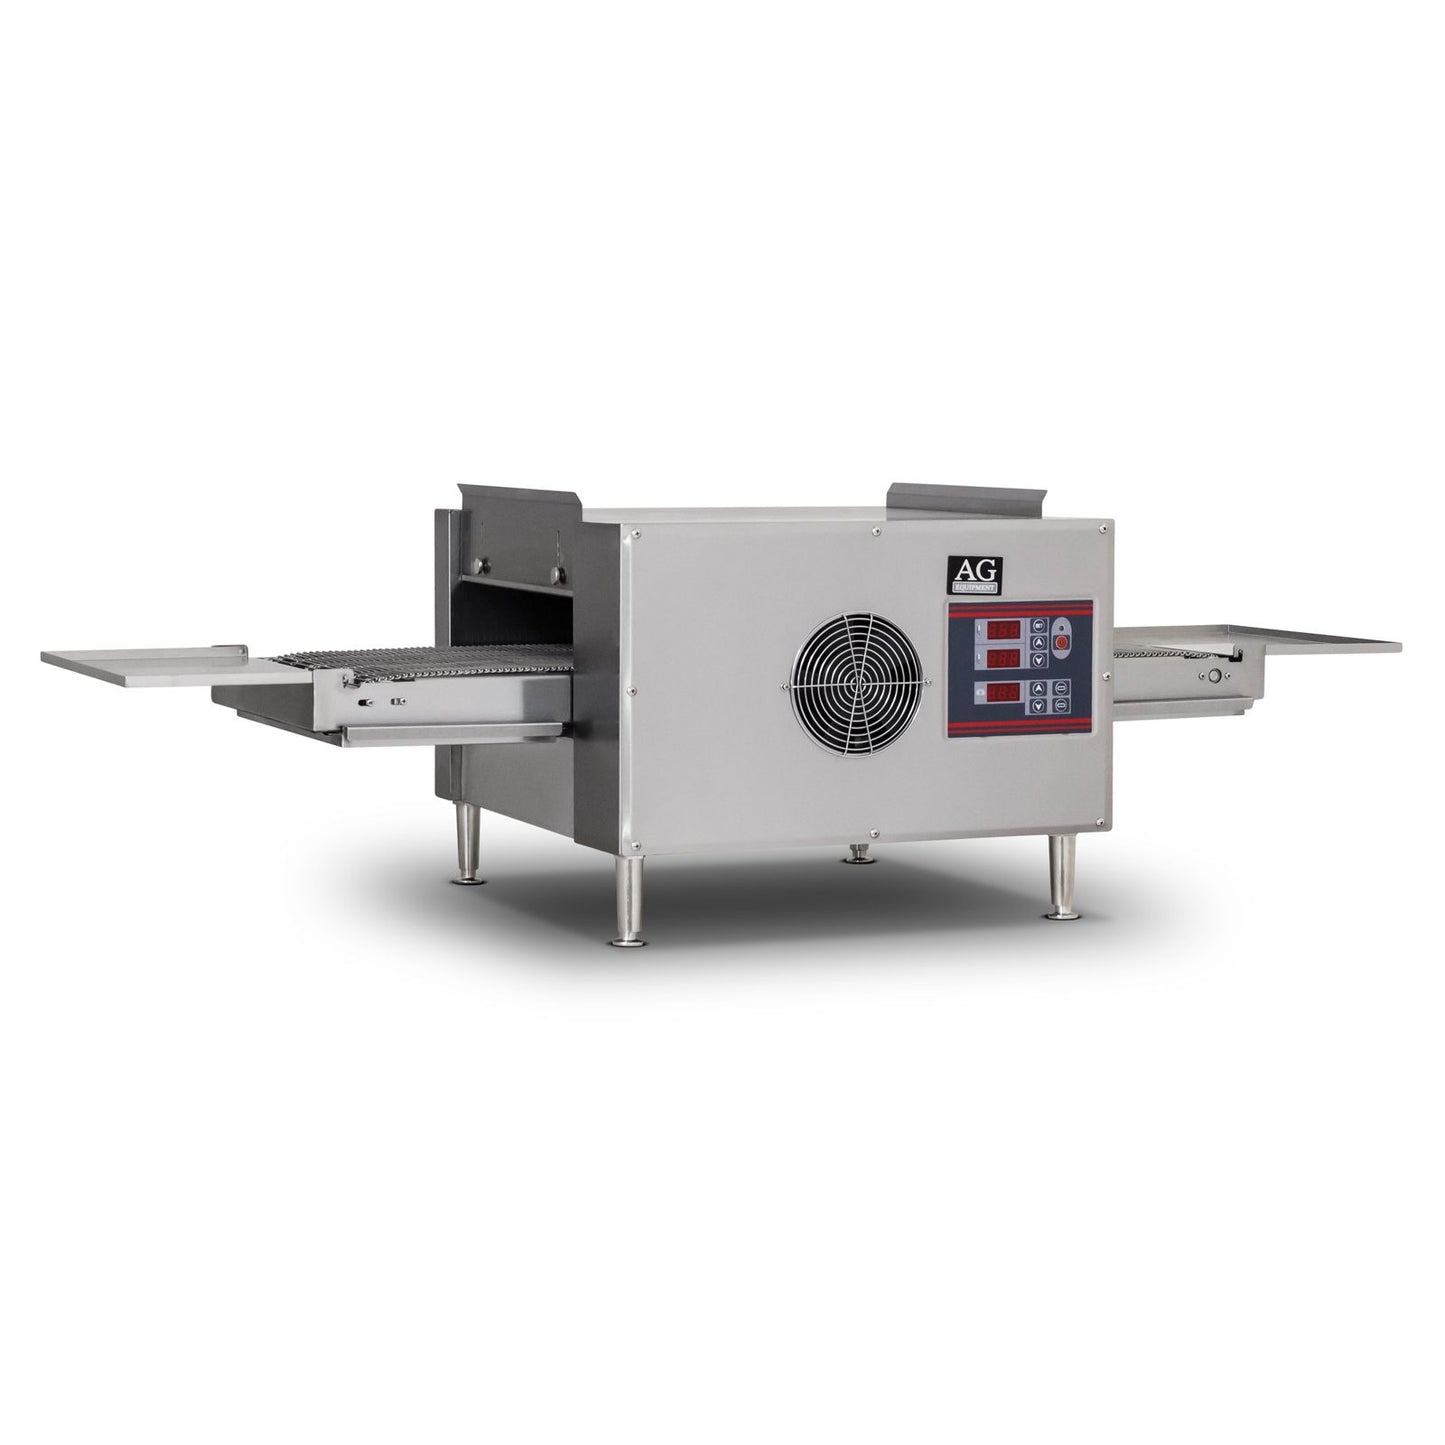 HX-1S Commercial Conveyor / Pizza Oven